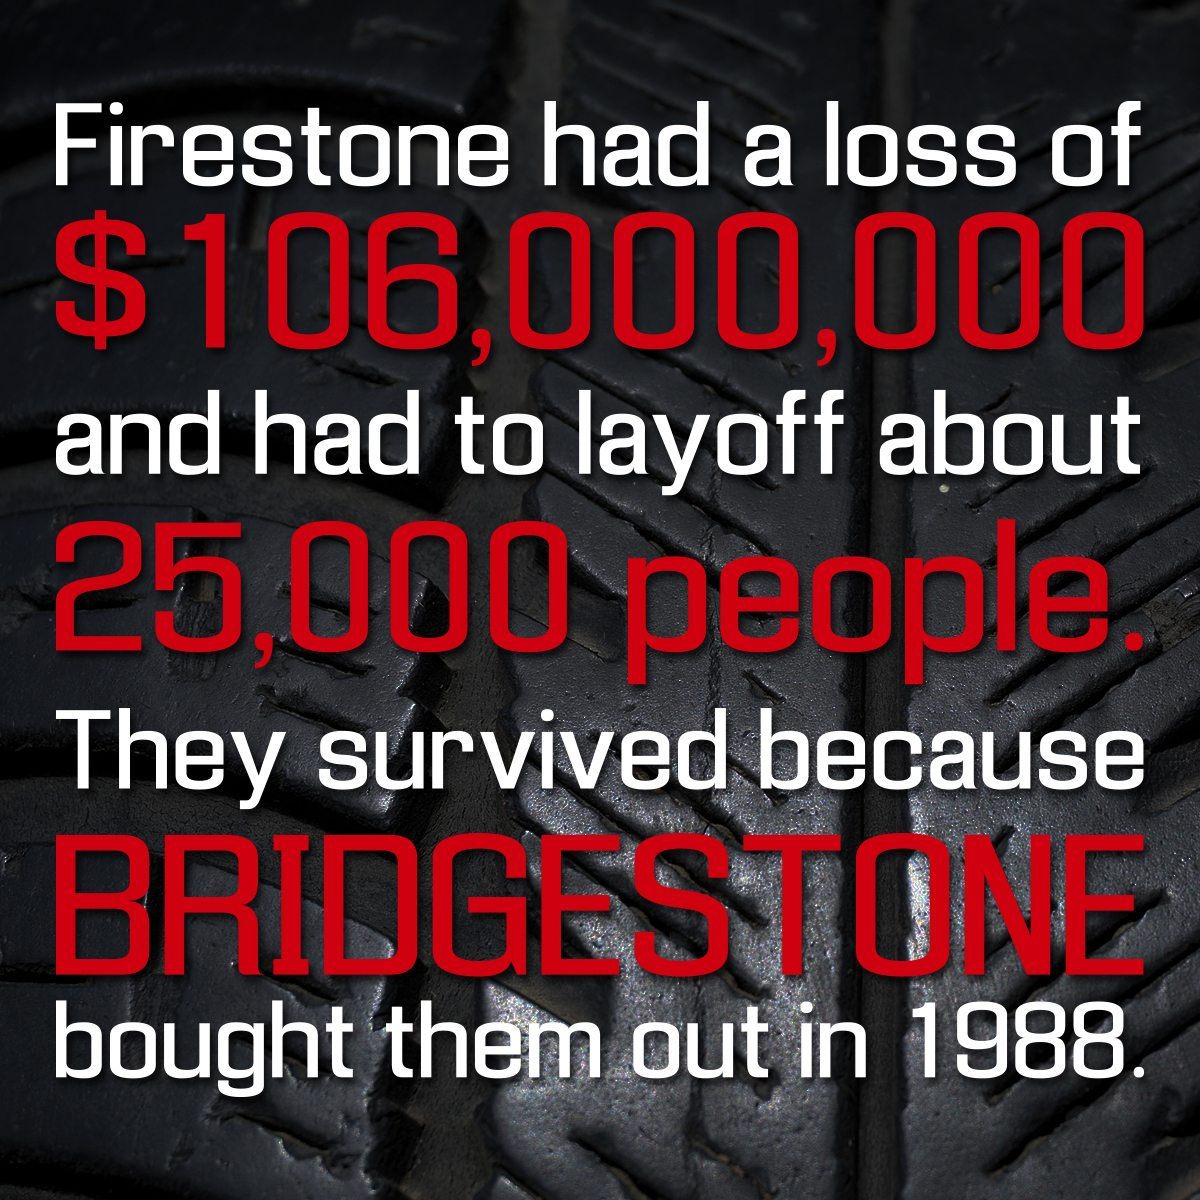 Firestone had a loss of 106,000,000...